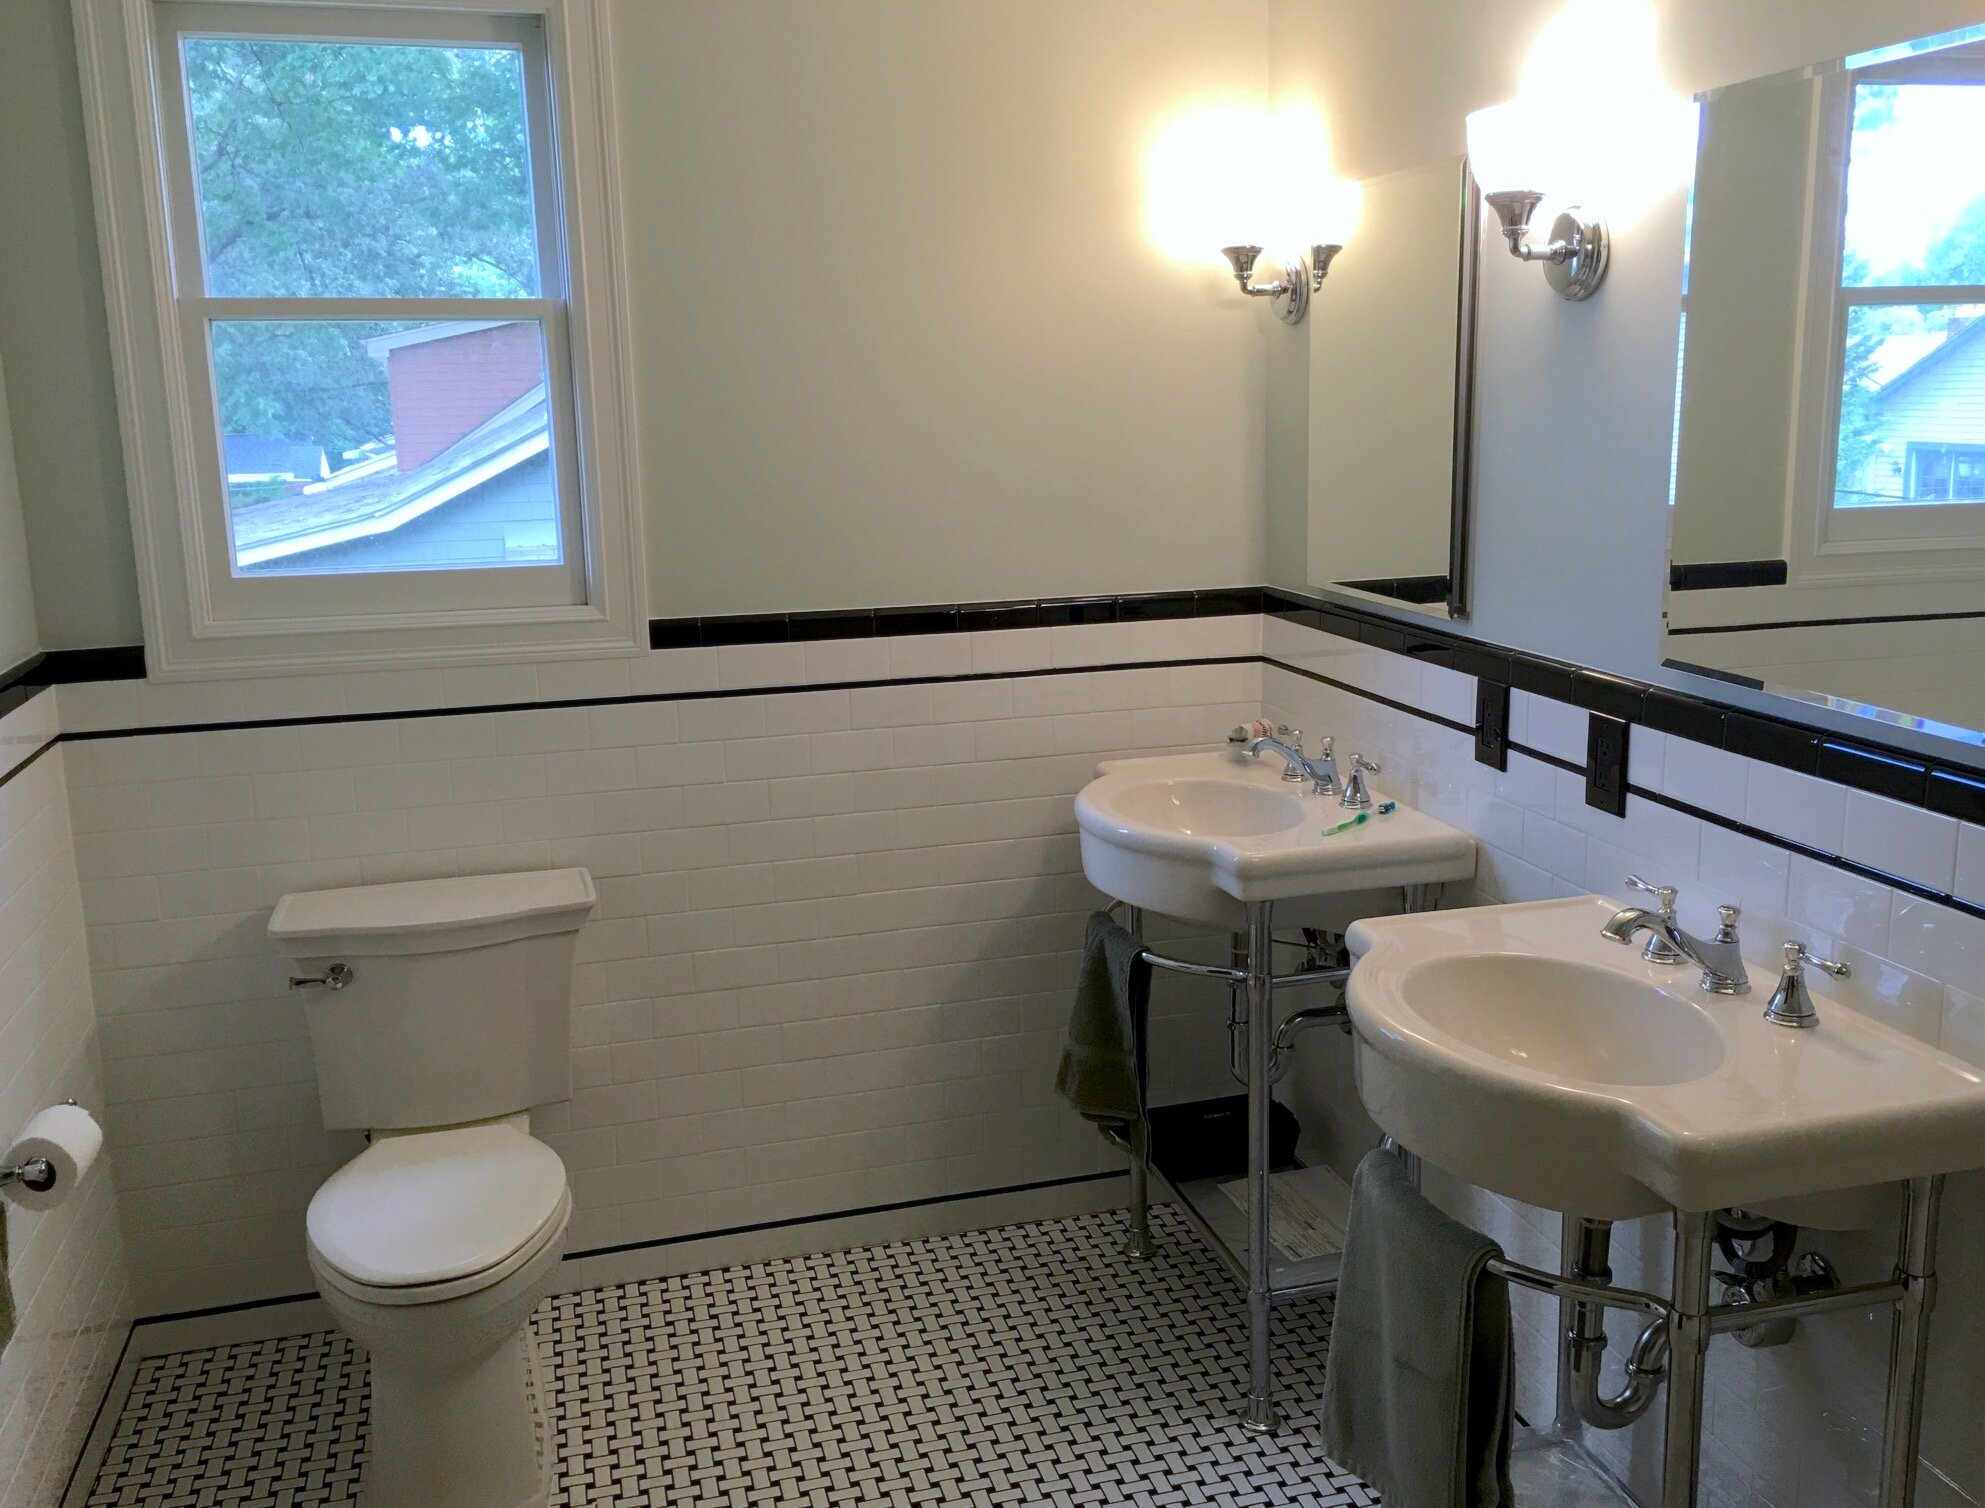  Full Bathroom Remodel:  New Plumbing, Toilet, Wall and Floor Tiles, Dual Vanity, Mirror, and Lighting. 